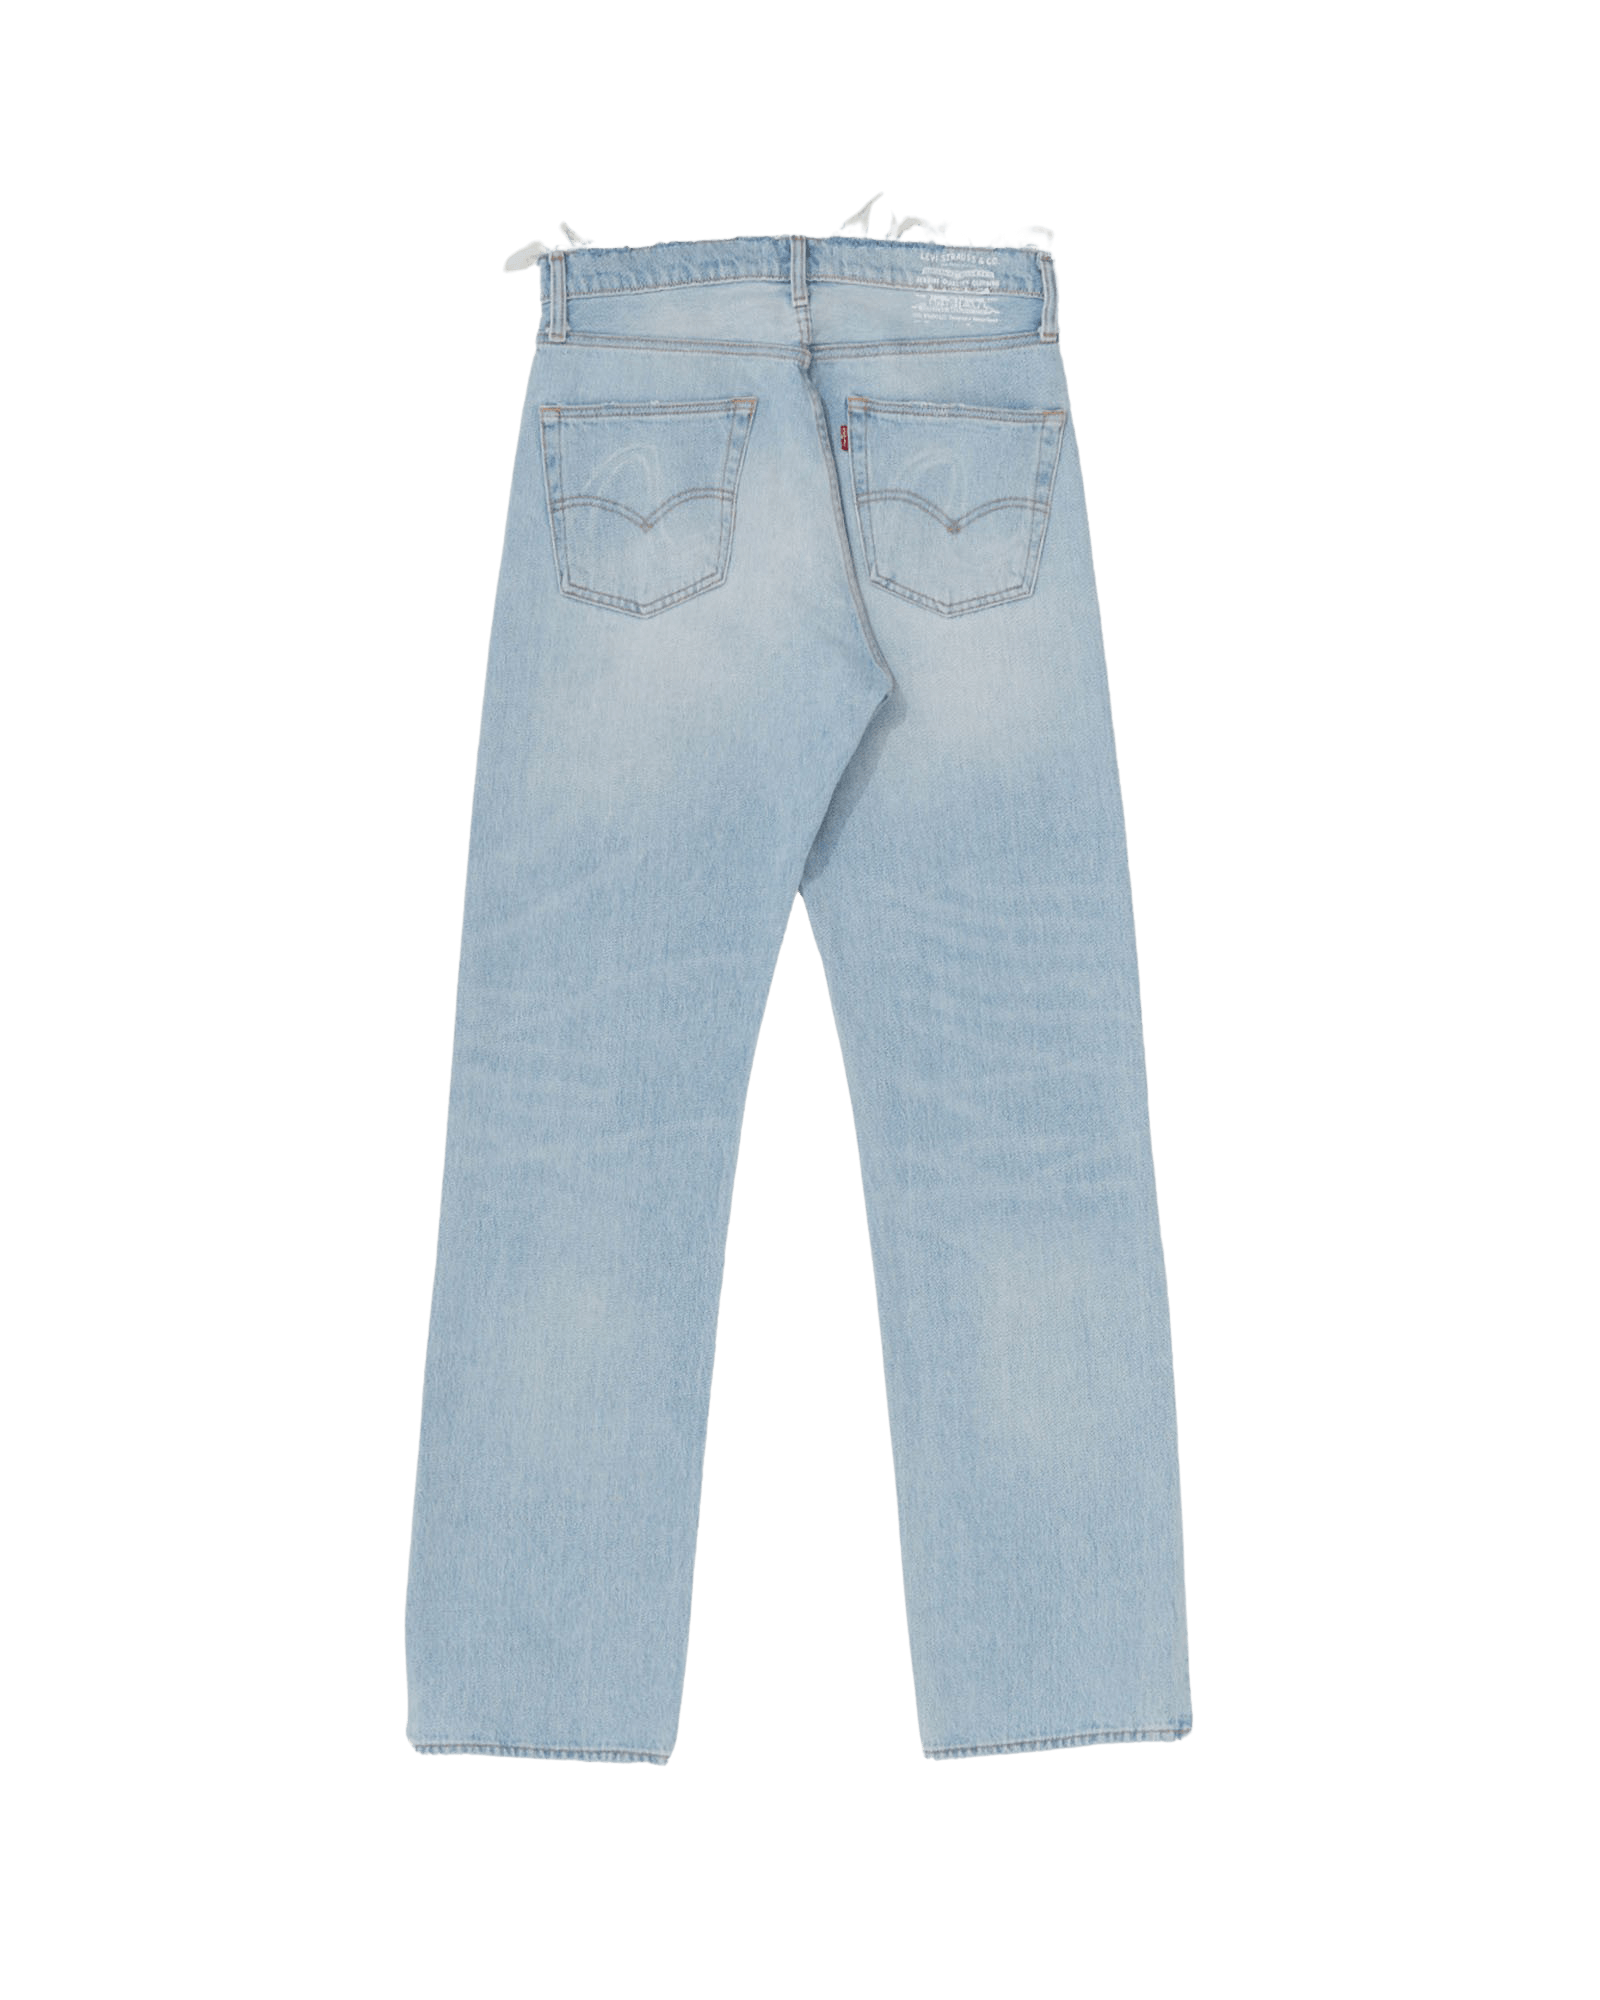 Lucky Brand Light Blue Distressed Skinny Denim Jeans sz 2